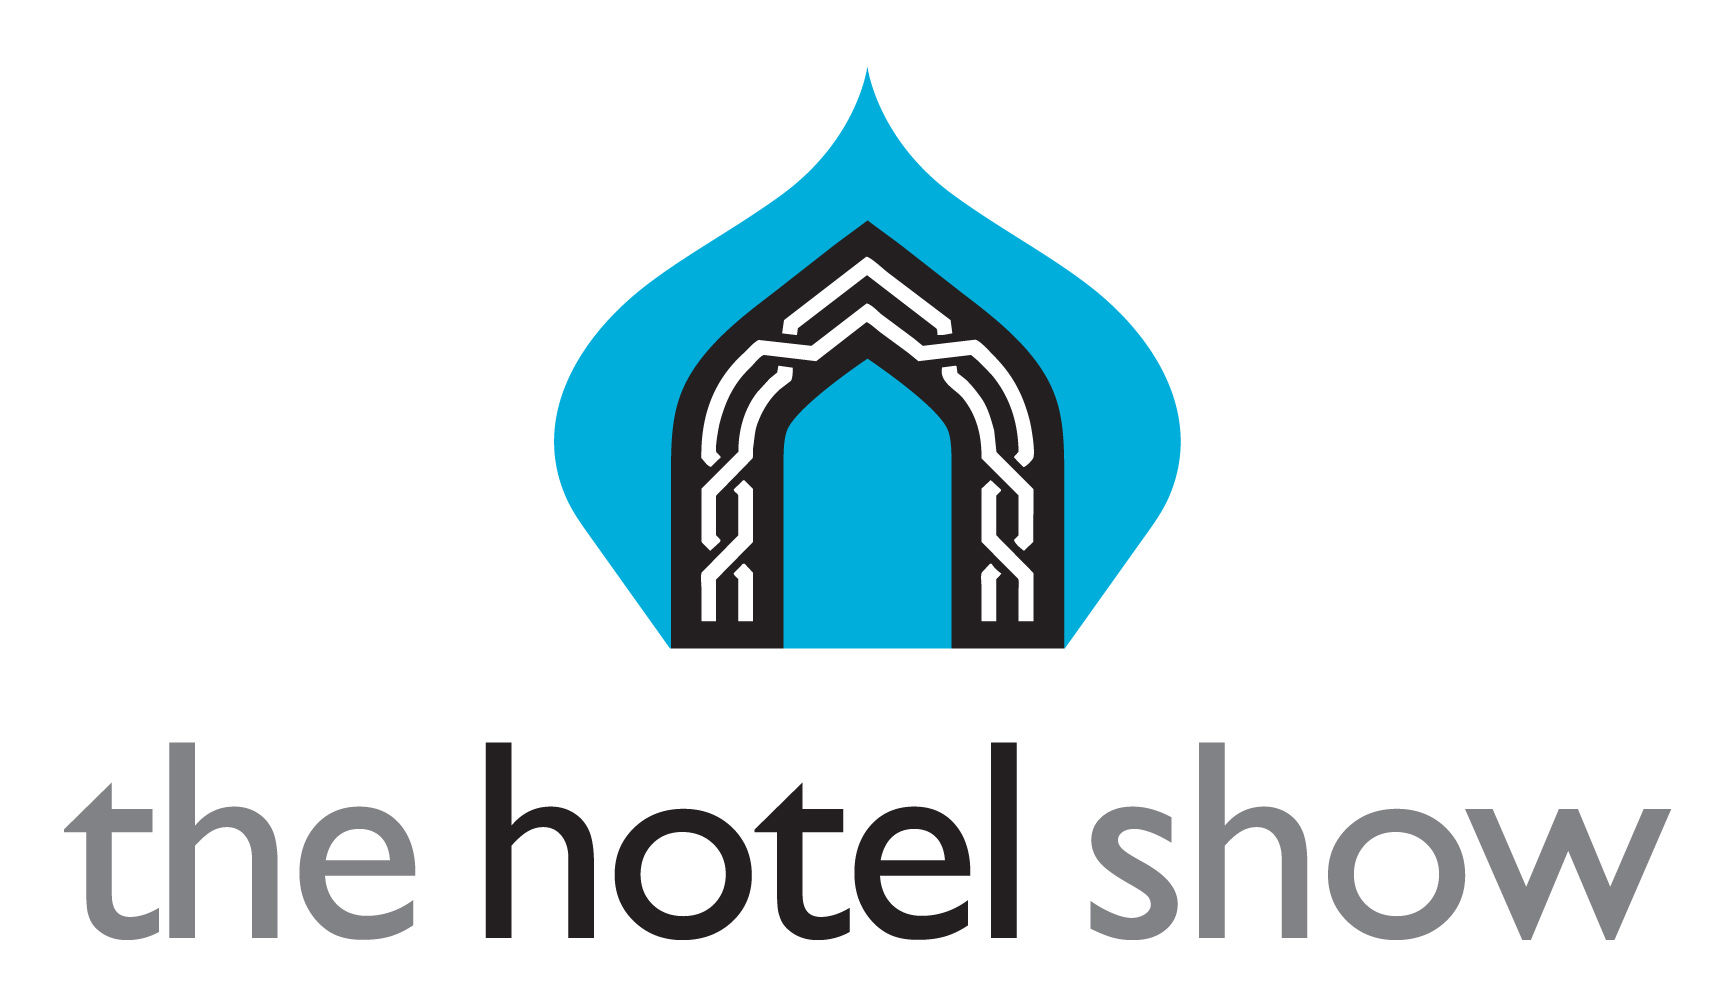 Dubai International Convention and Exhibition Centre (DICEC). Hotel show. Отель Восток логотип. The Dubai International Boat show logo. Отель show